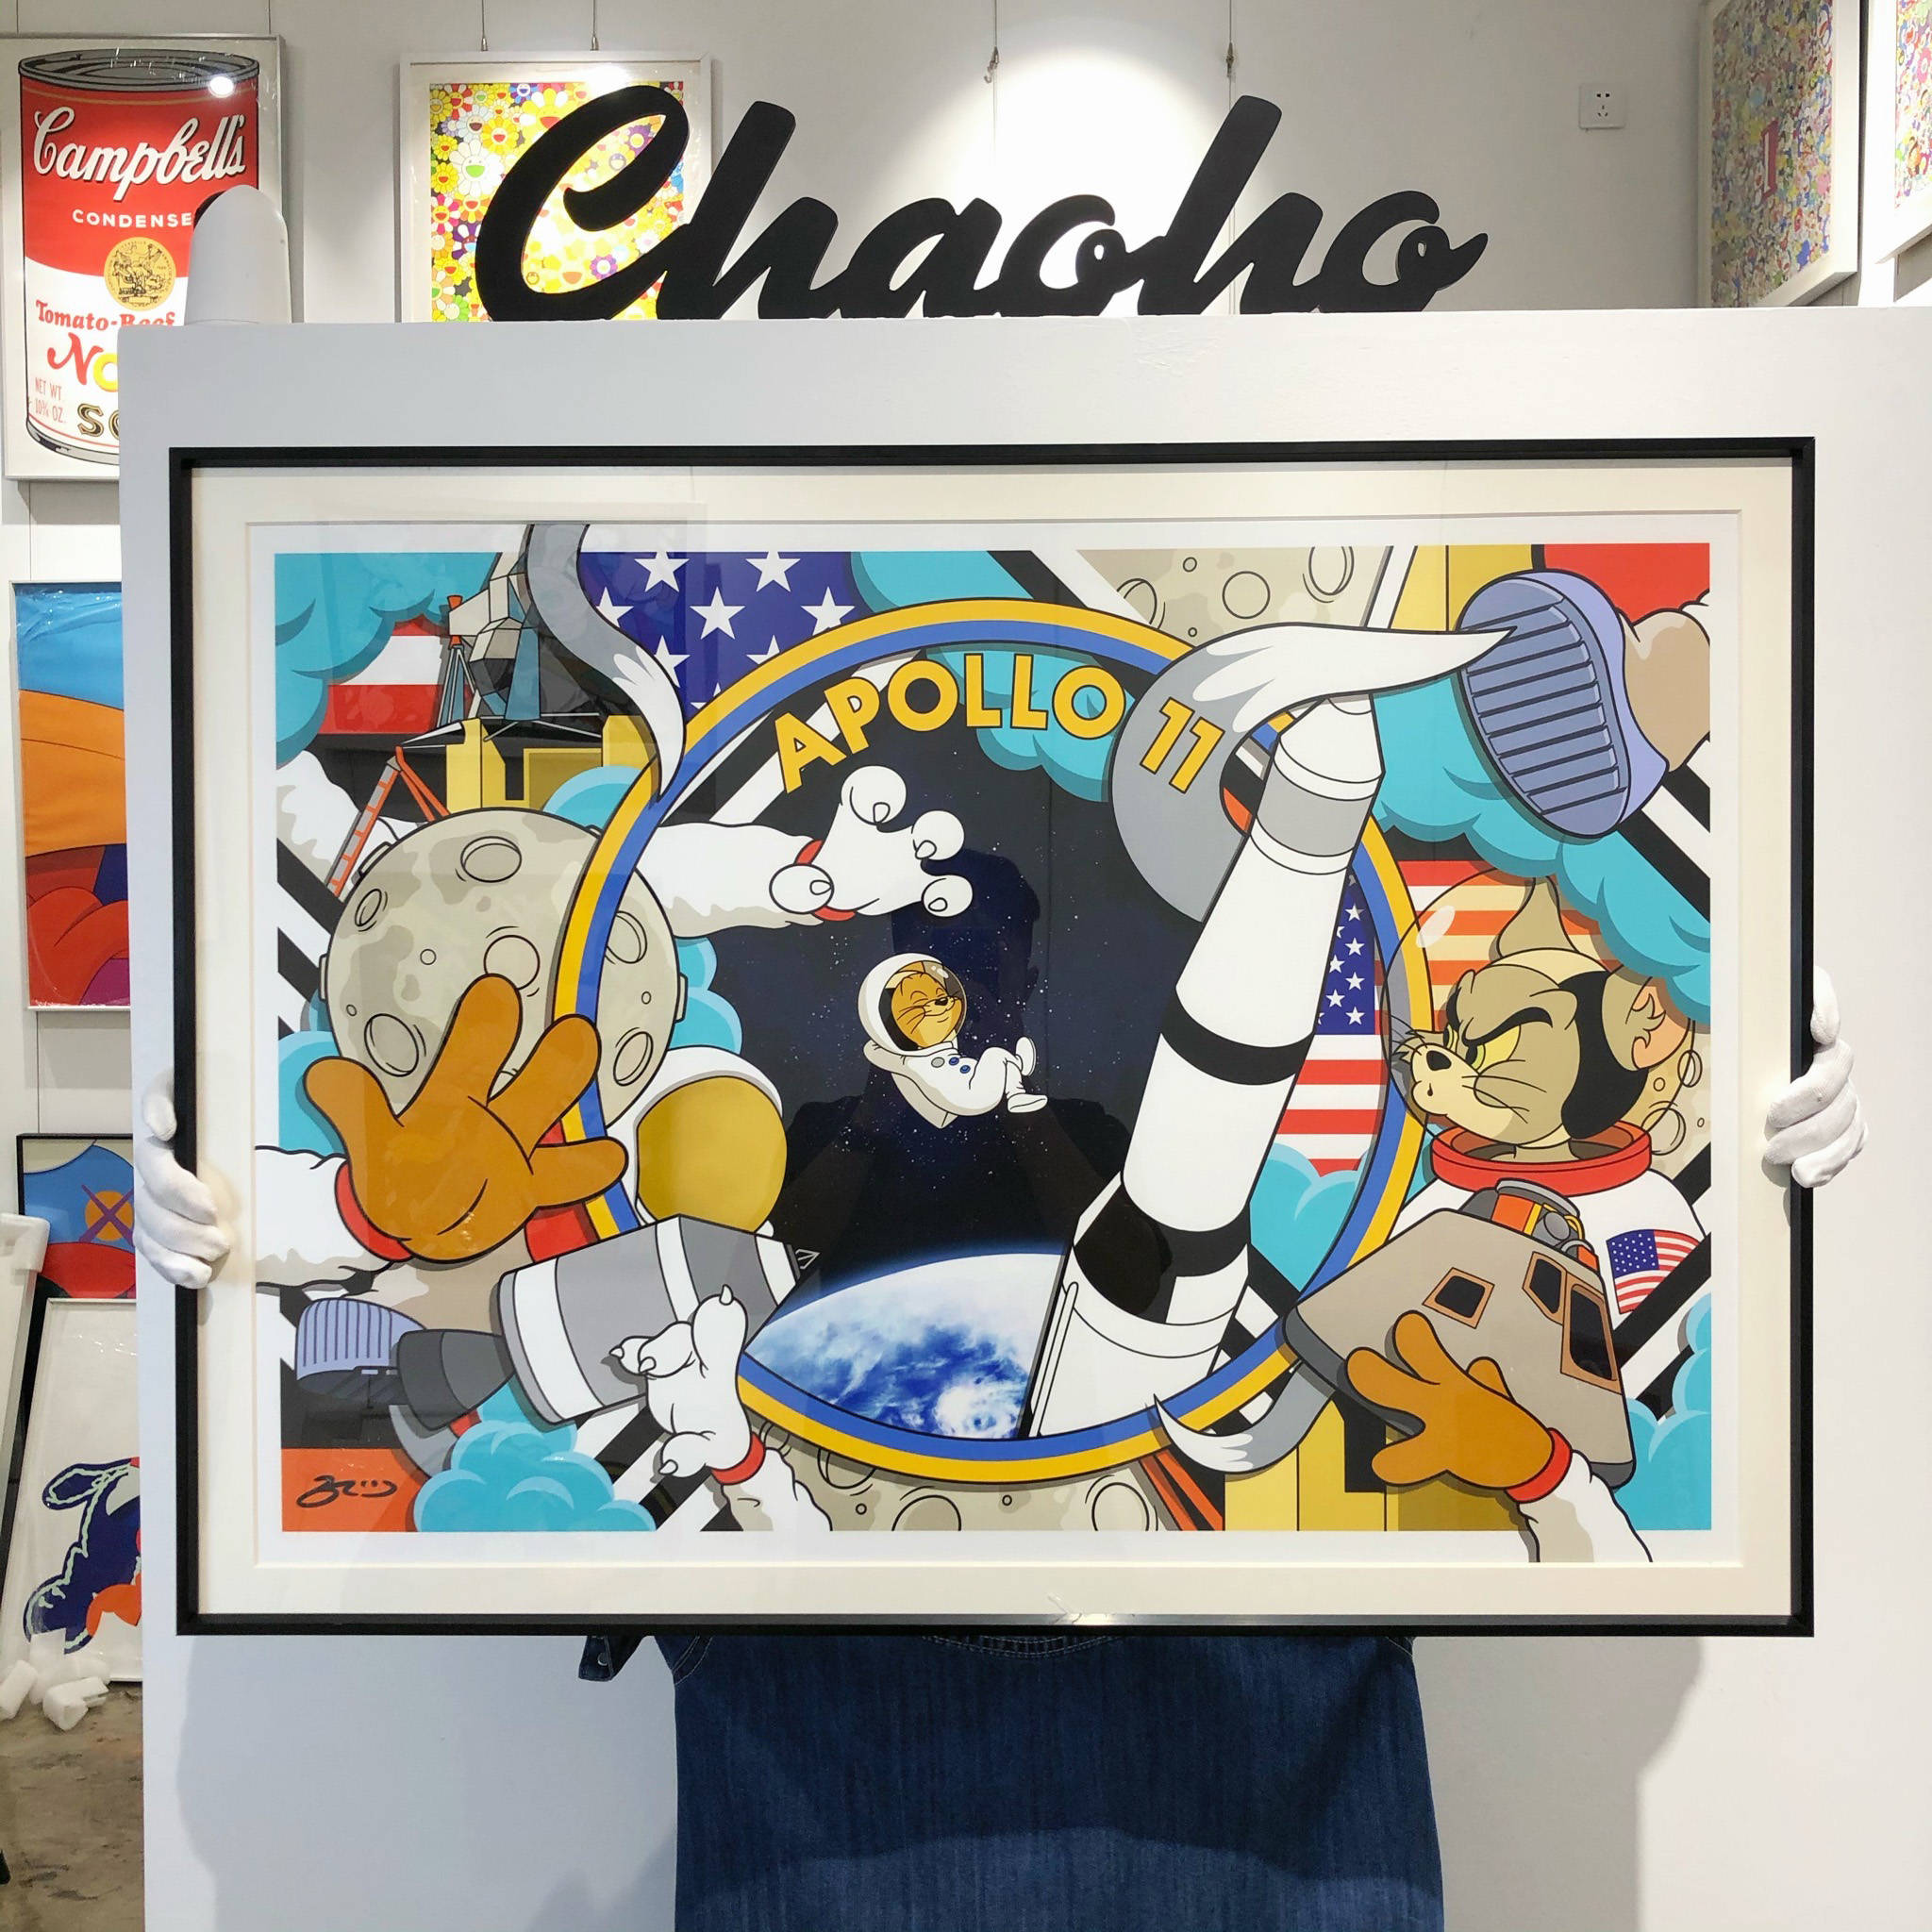 broos版画阿波罗11号猫和老鼠装饰画TomAndJerry宇航员挂画CHAOHO